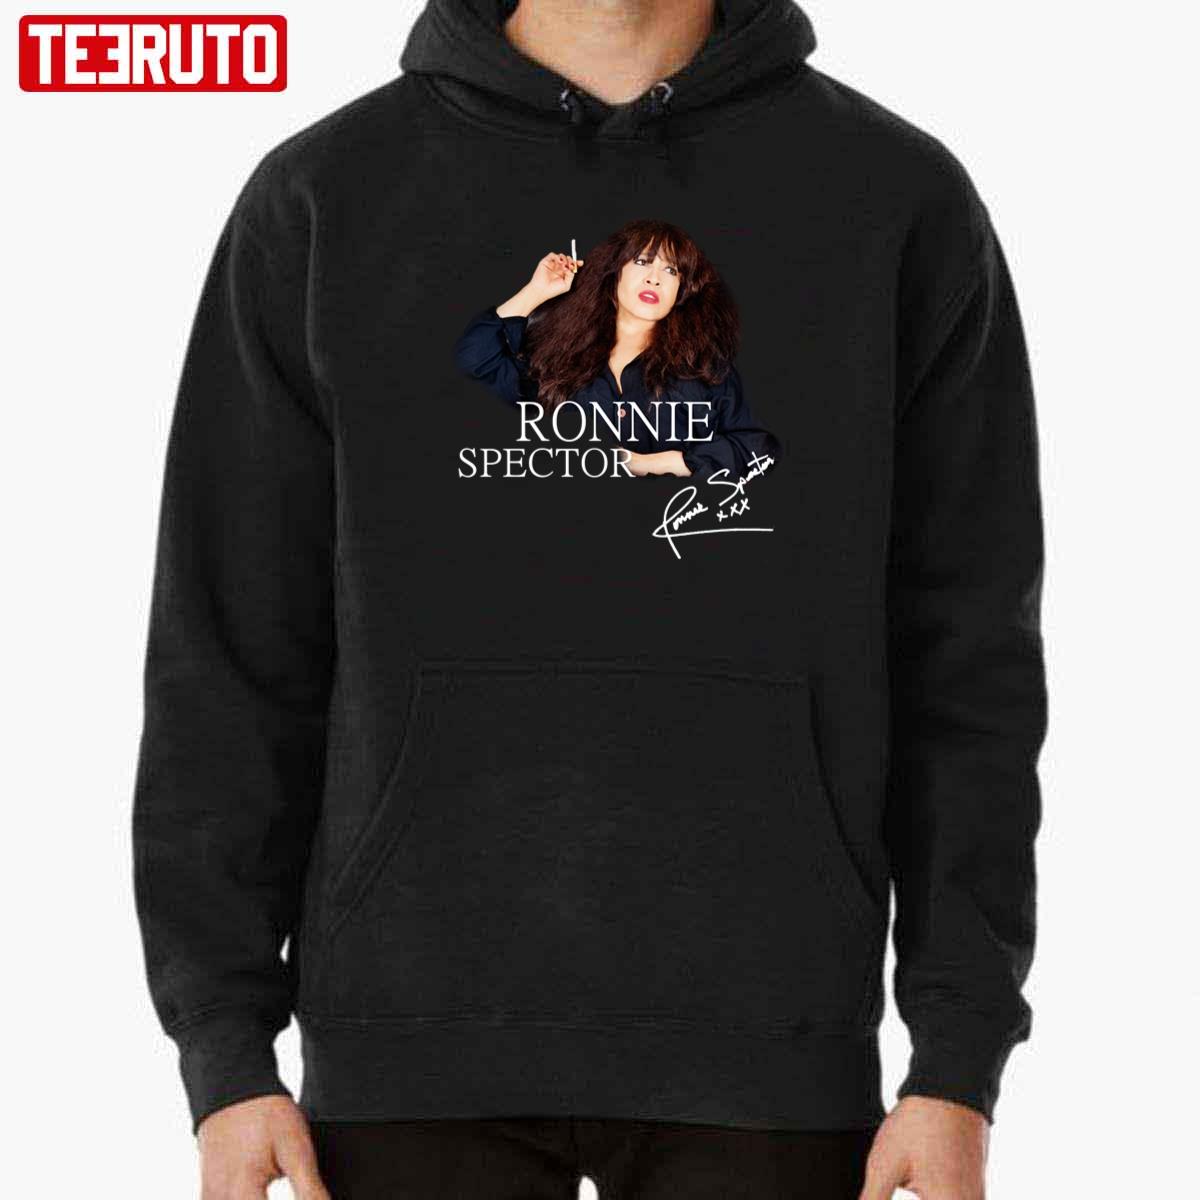 Ronnie Spector Rip Signature Unisex T-Shirt